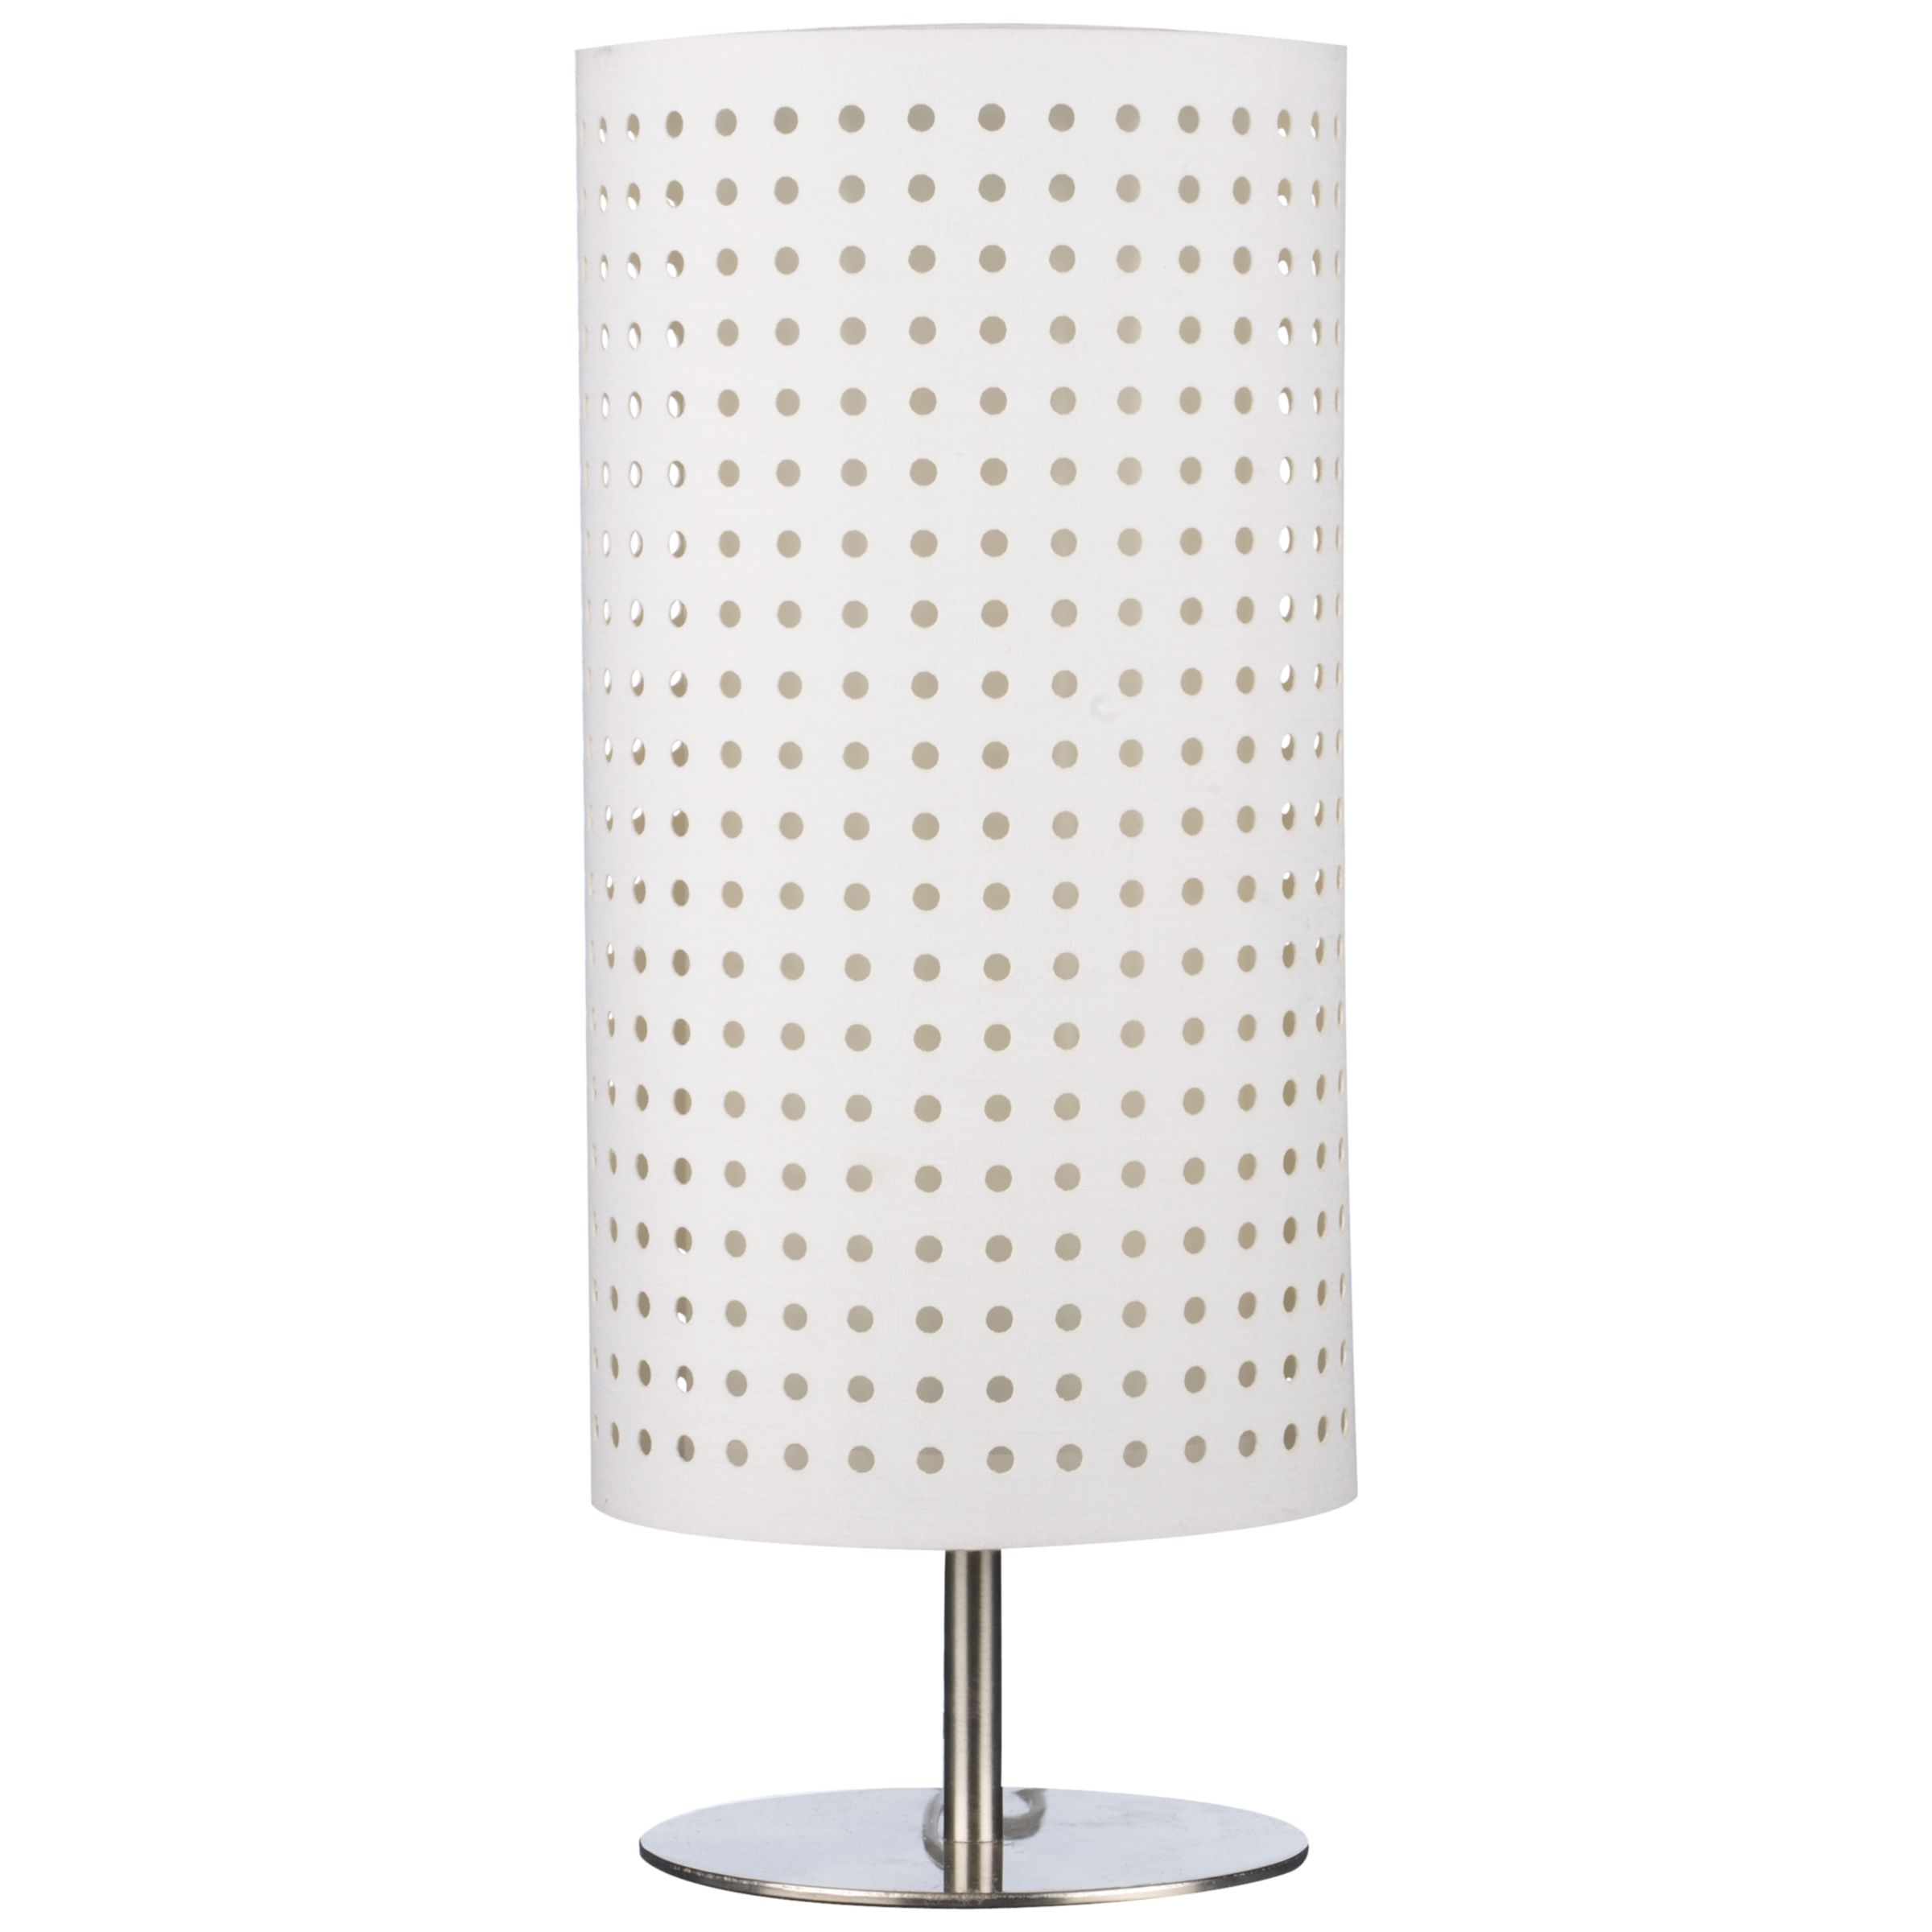 John Lewis Monica Table Lamp, White